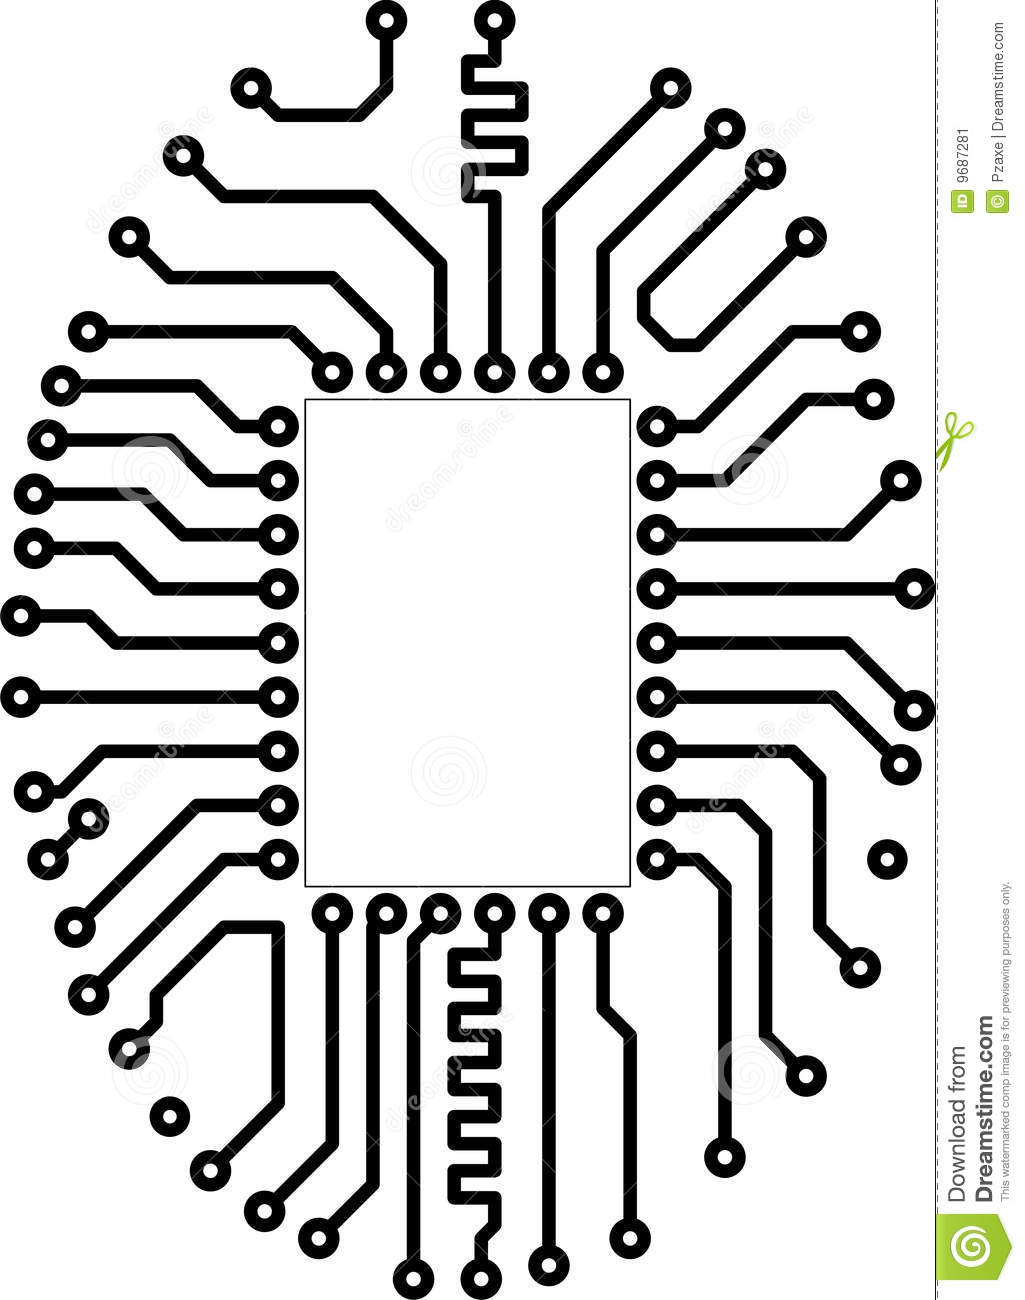 ... printed circuit board - V